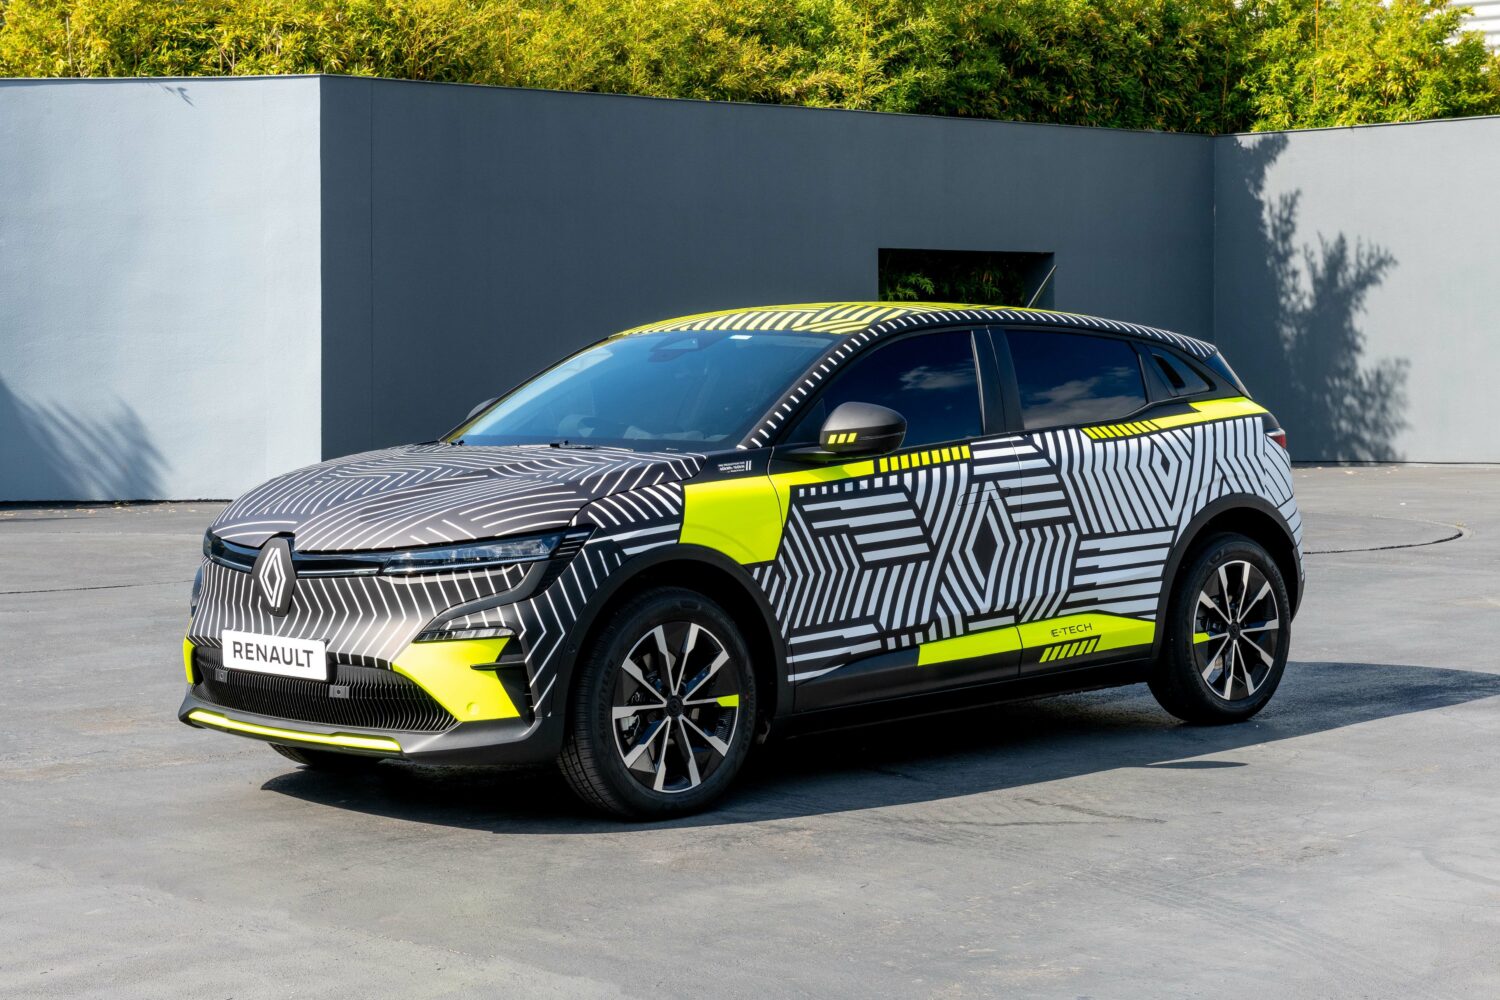 2021 - New Renault MEGANE E-TECH Electric pre-production